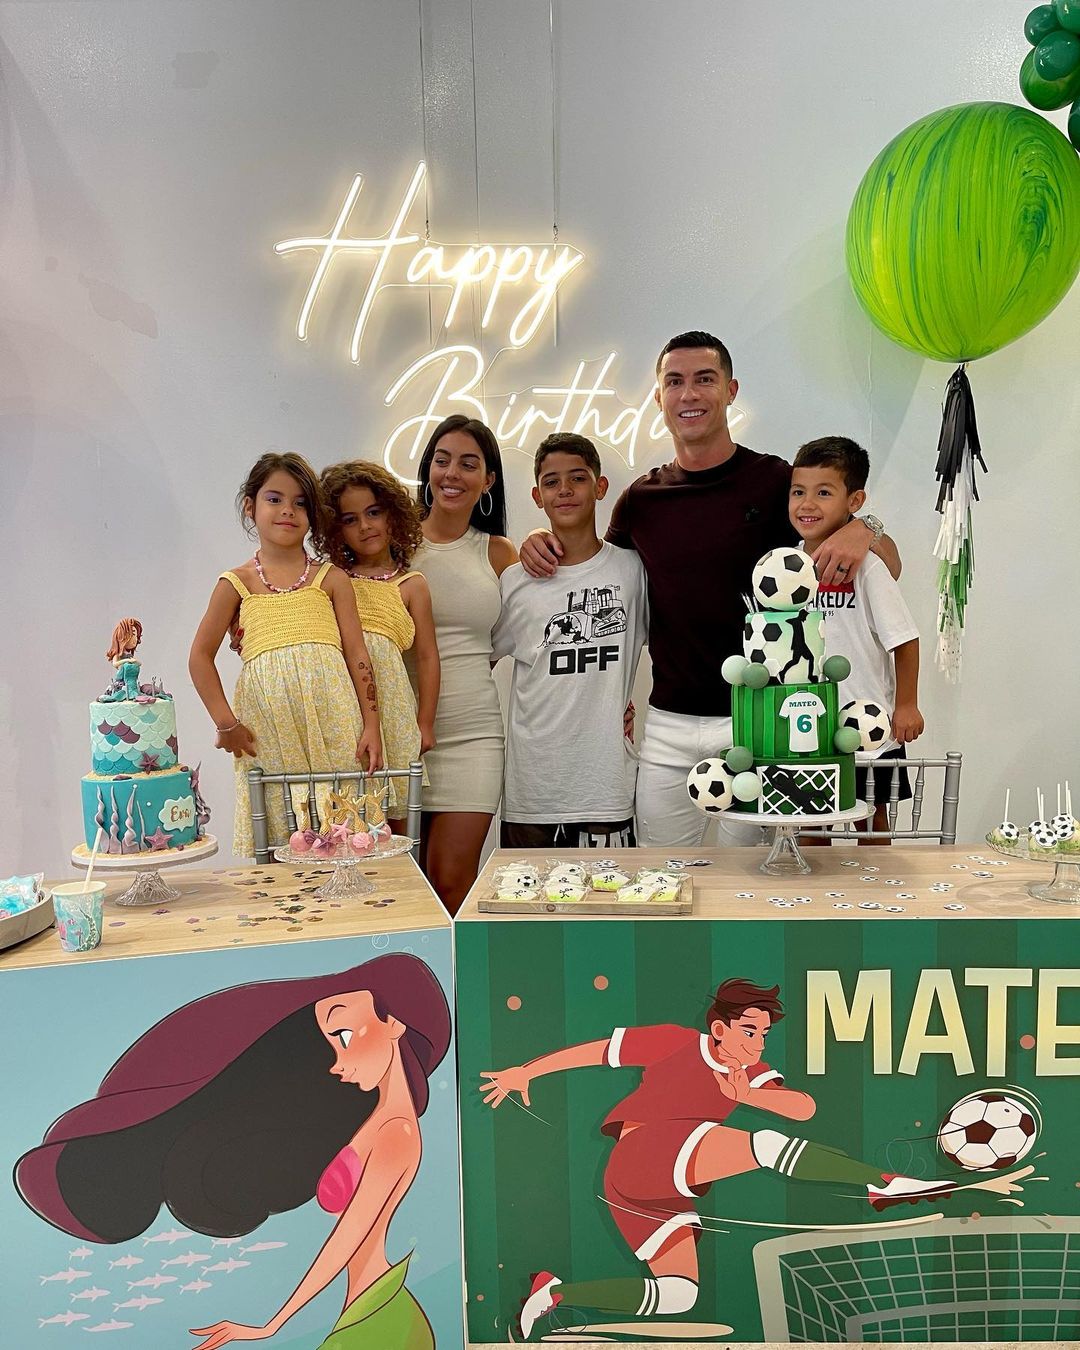 Riyadh, how beautiful you are' - Georgina Rodriguez & Cristiano Ronaldo  settle in to new Saudi home with family amusement park trip